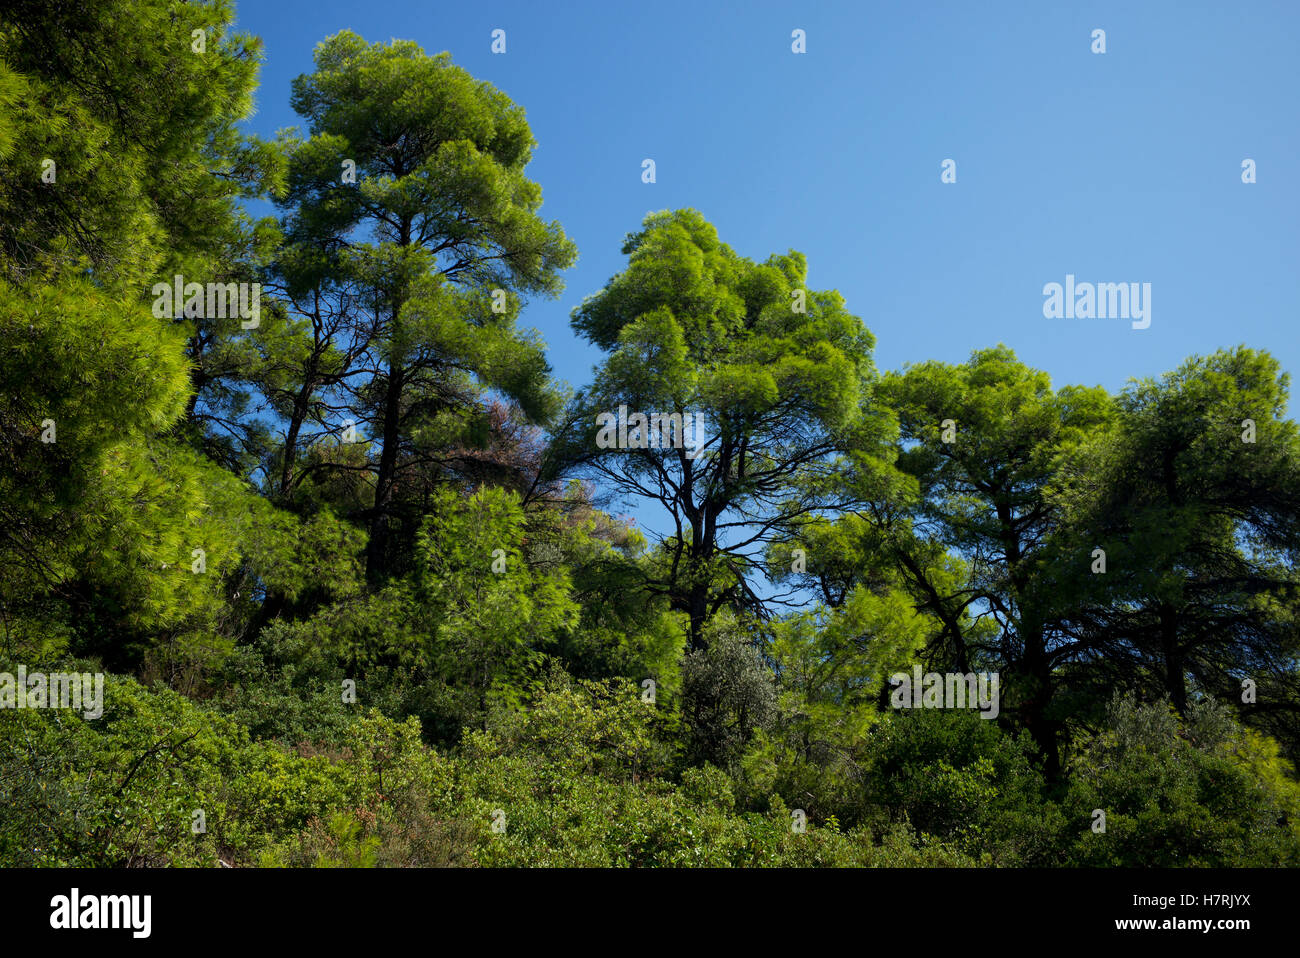 Lush green trees against a blue sky; Sporades, Thessalia Sterea Ellada, Greece Stock Photo